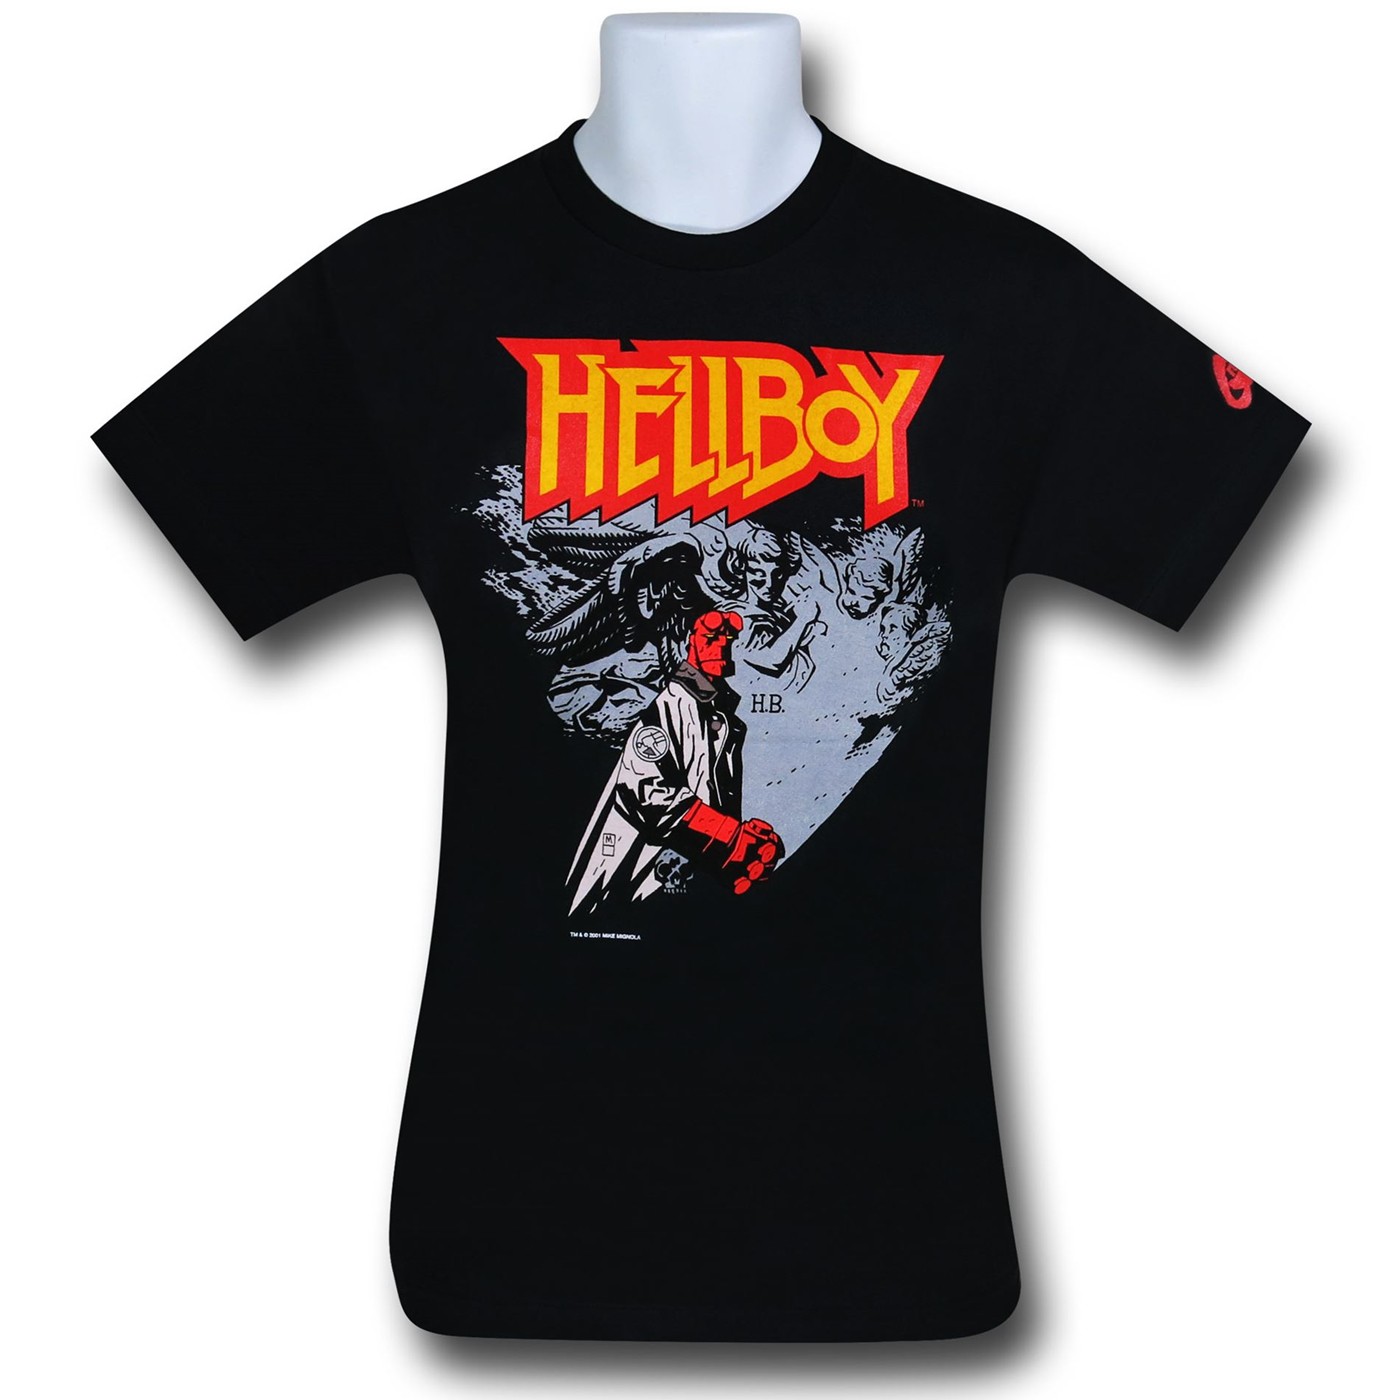 Hellboy II T-Shirt